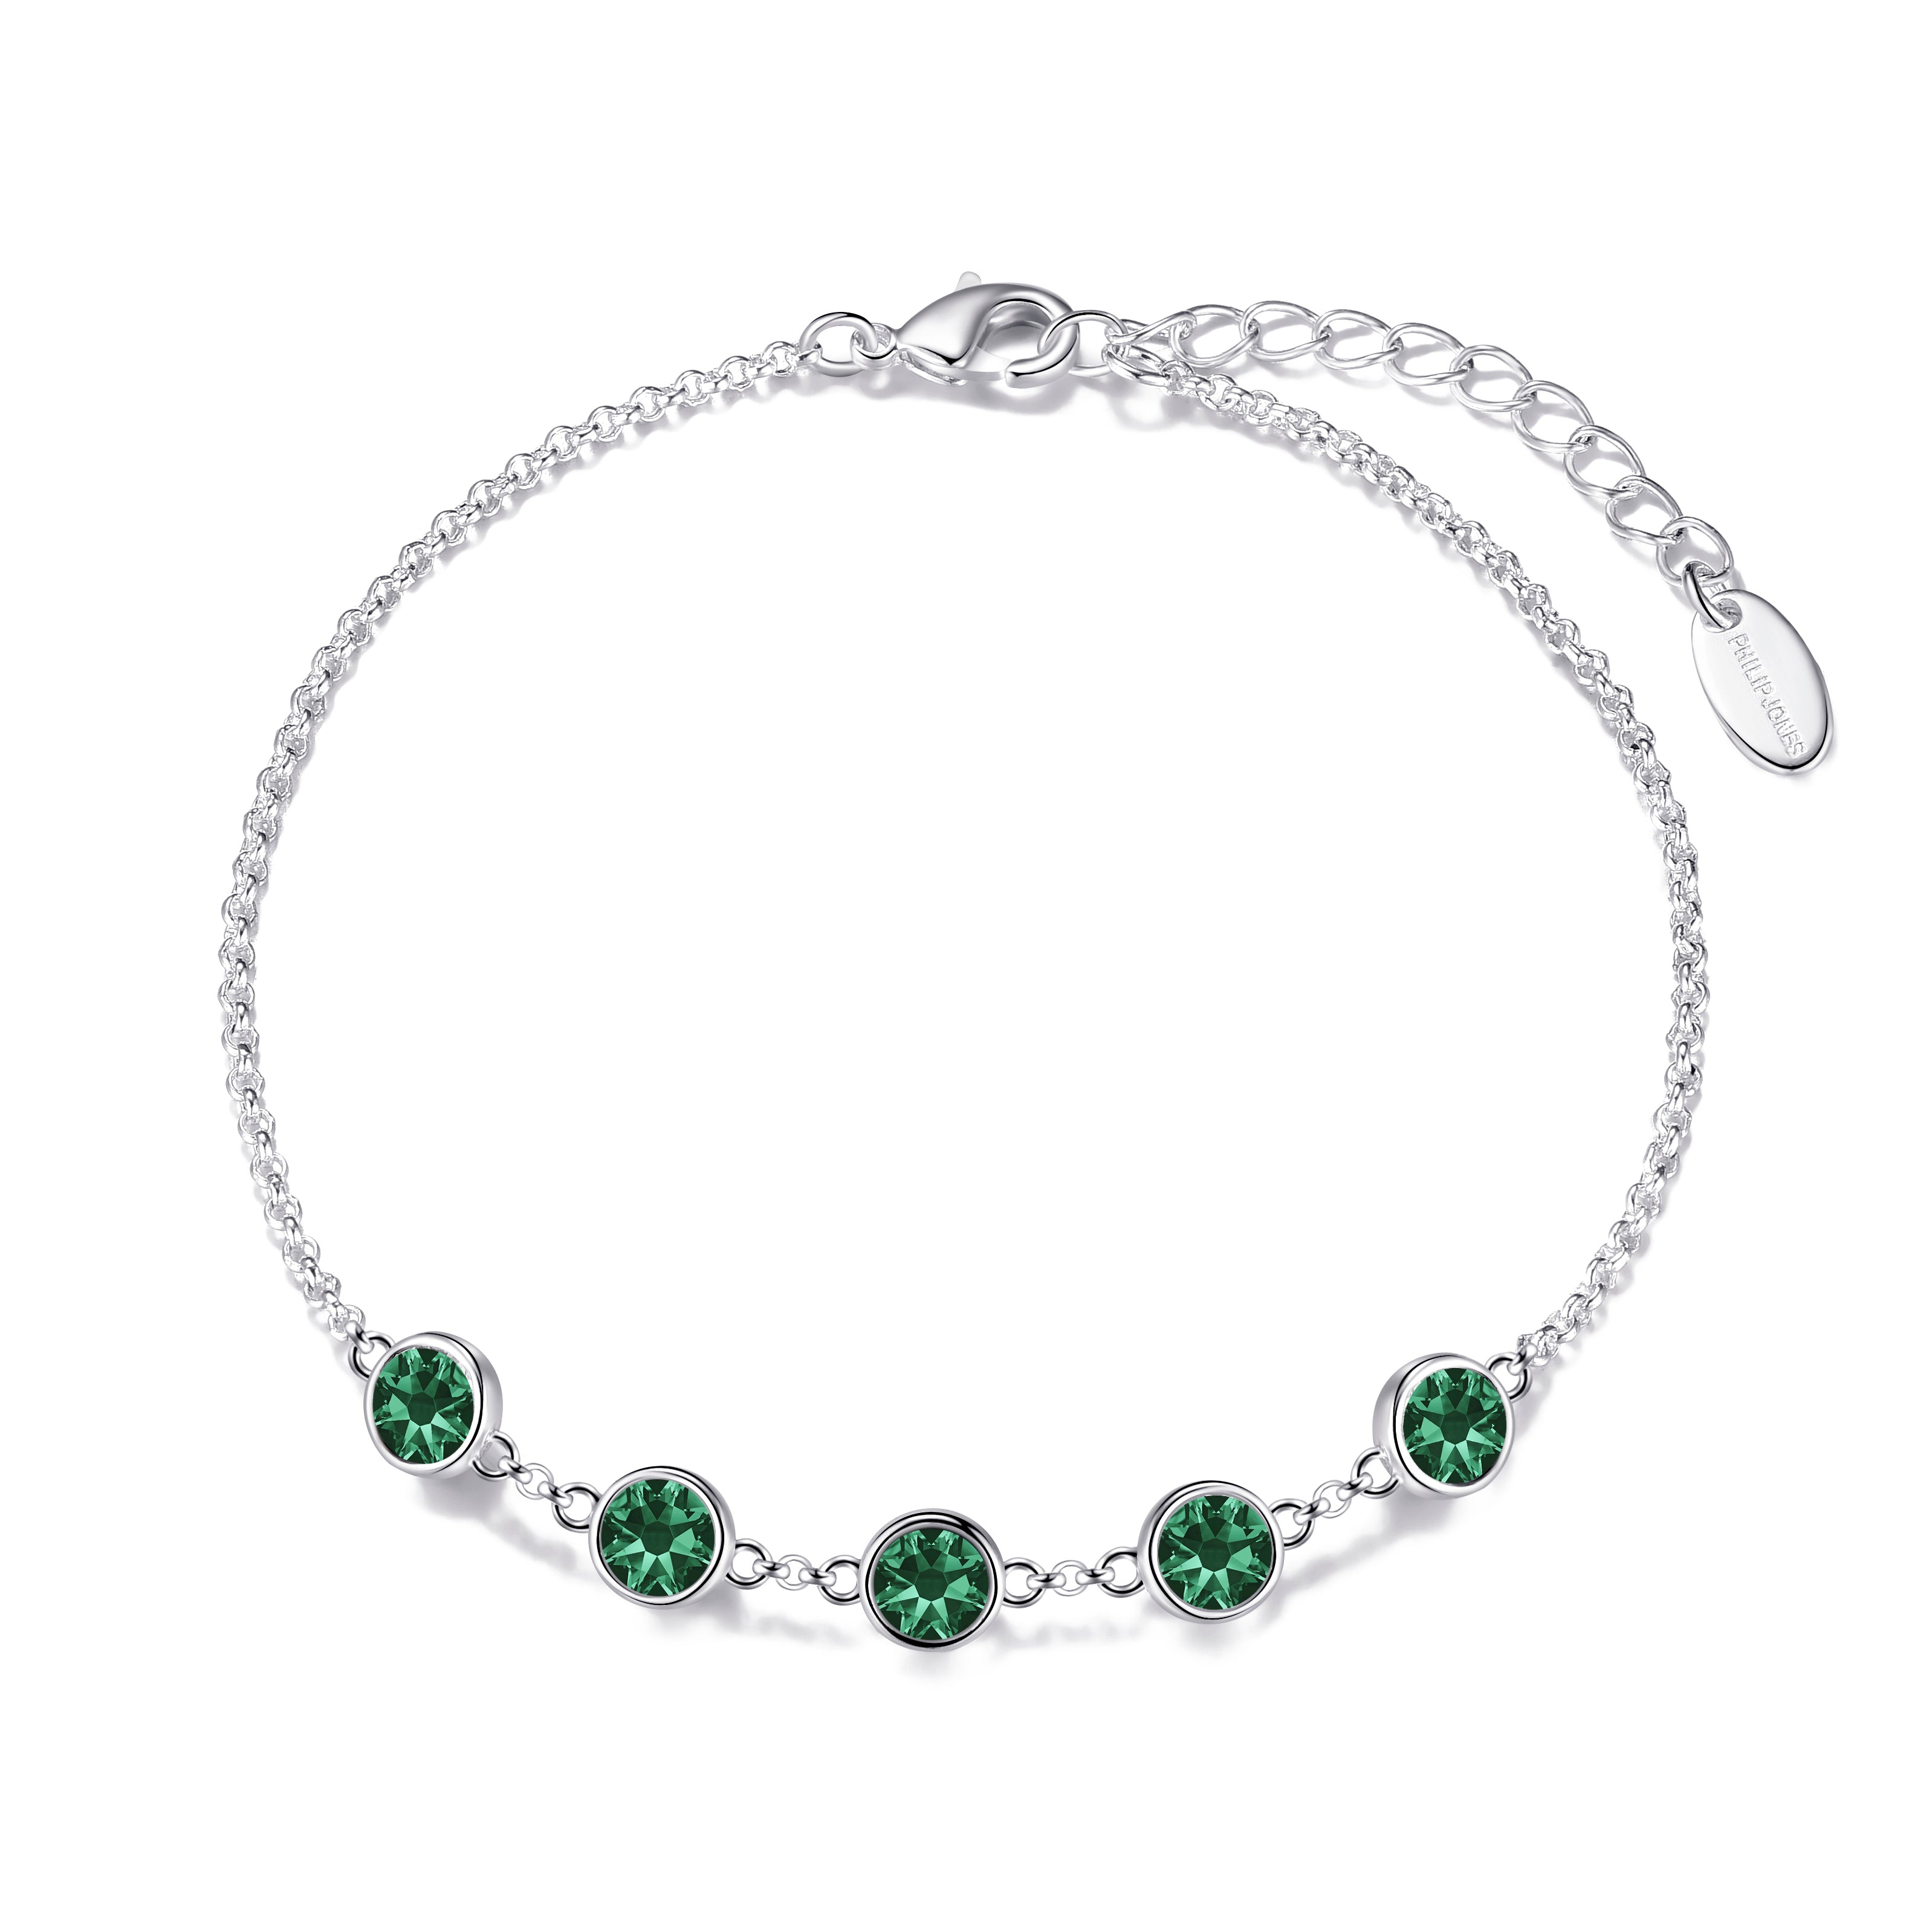 Green Crystal Chain Bracelet Created with Zircondia® Crystals by Philip Jones Jewellery